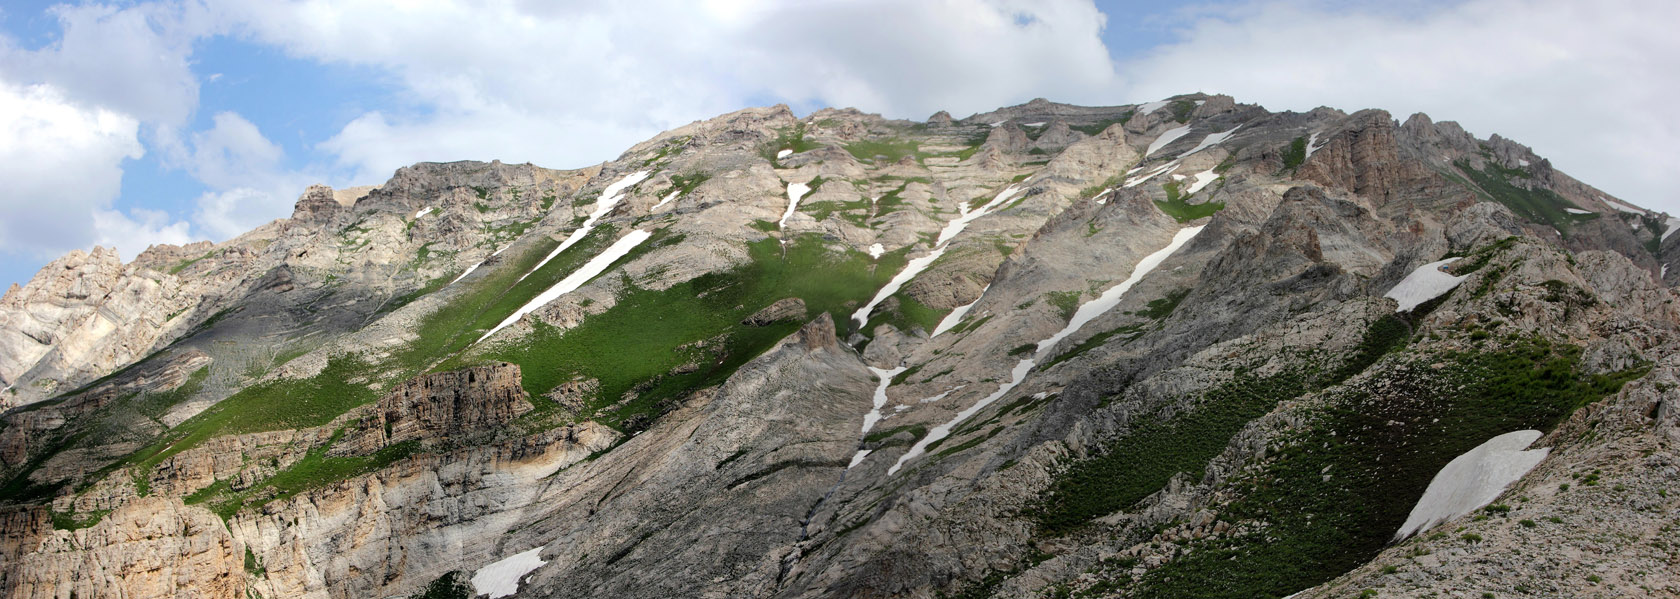 Западный гребень Бол. Чимгана, изображение ландшафта.